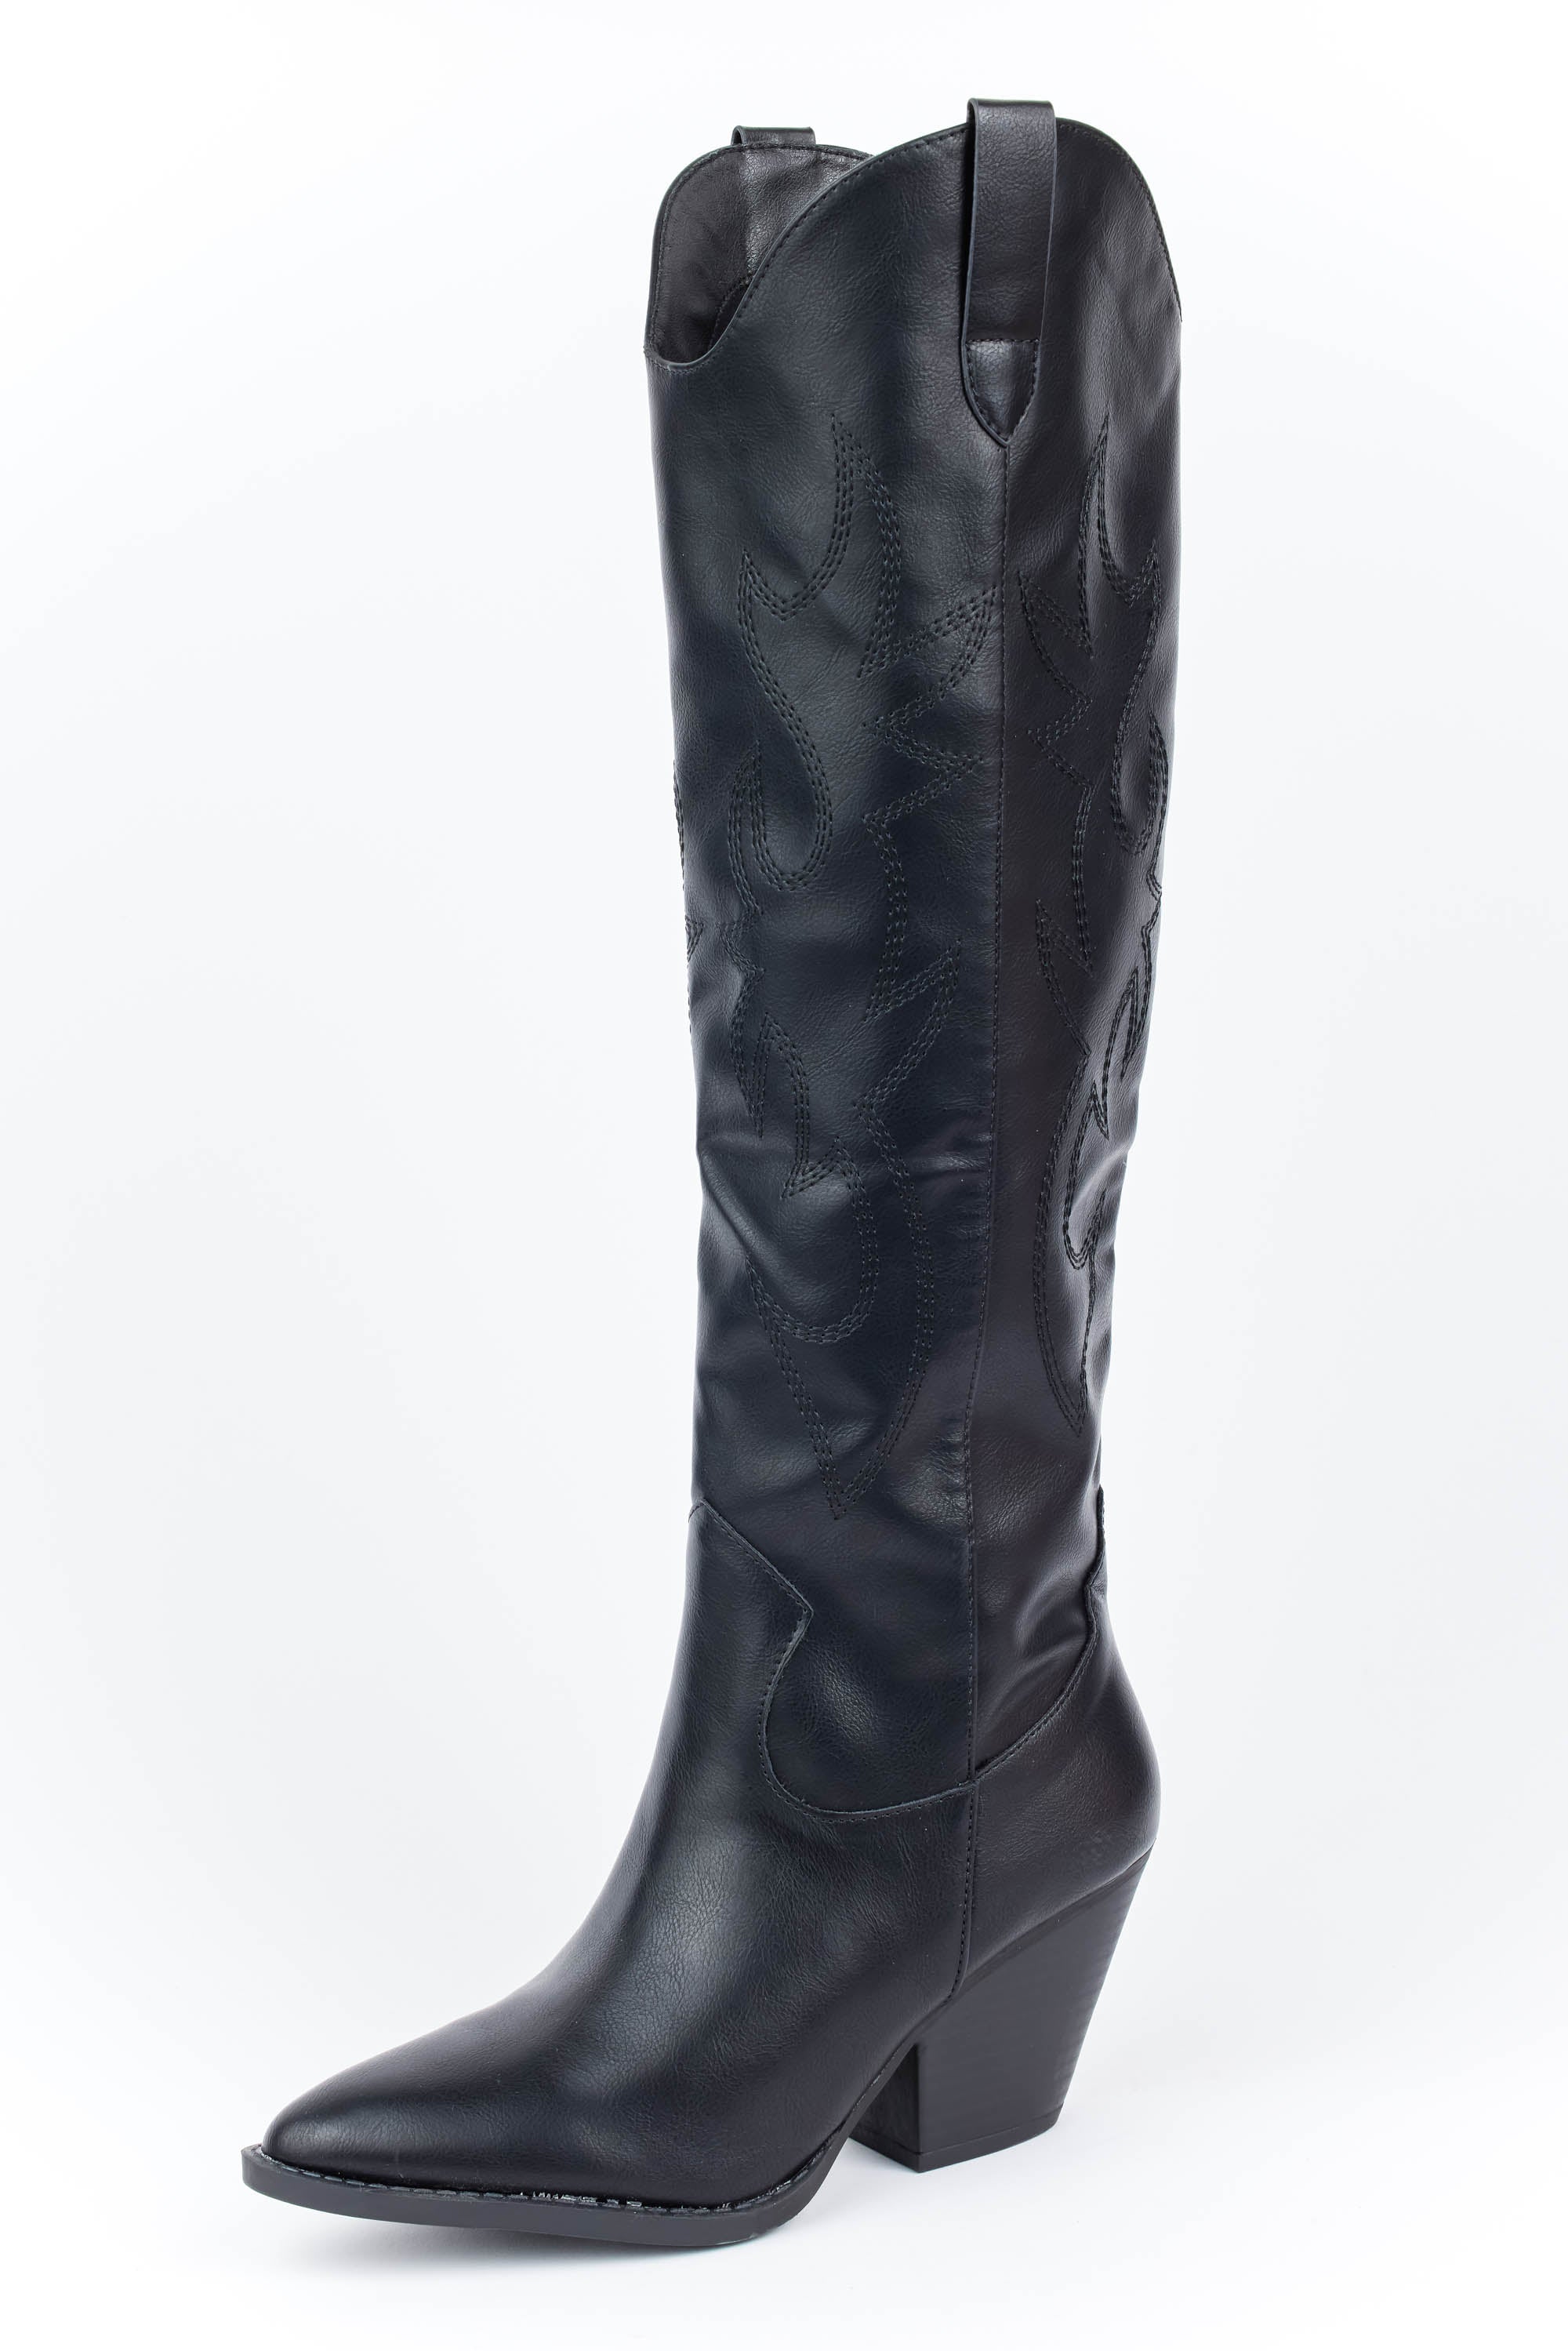 Savannah Boots - Black